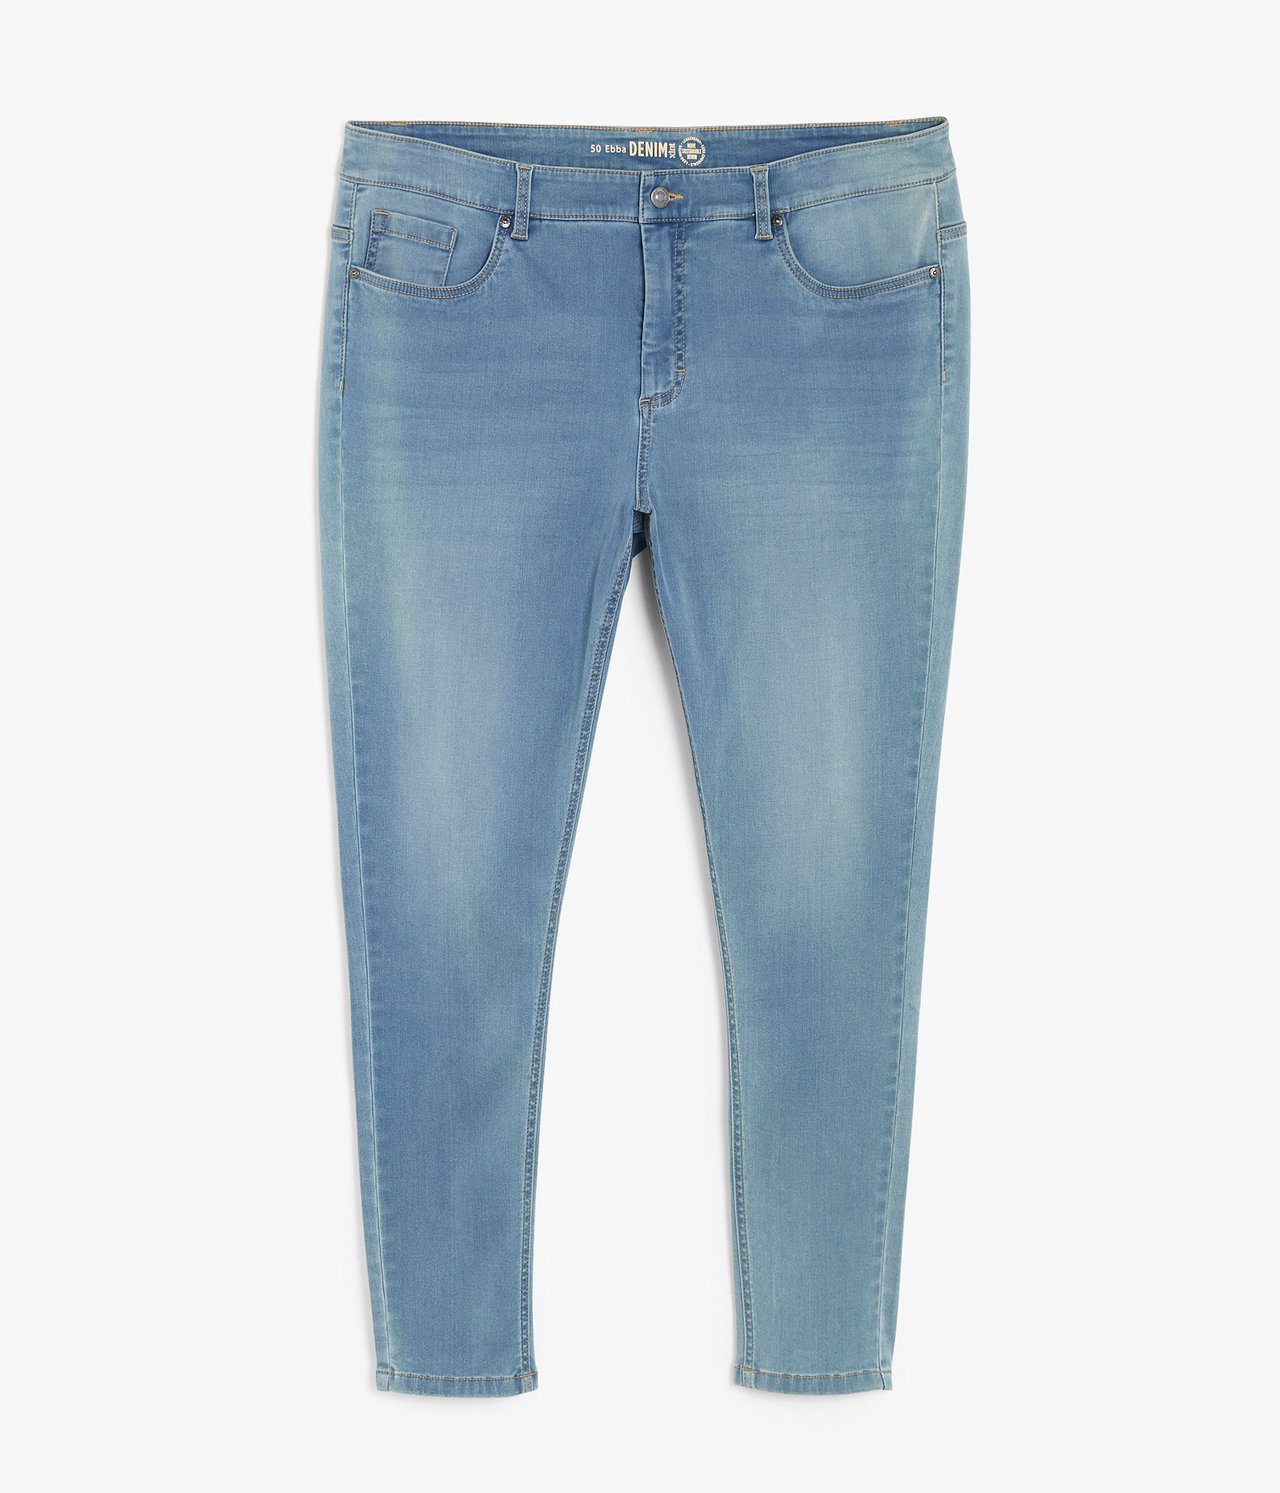 Ebba slim jeans